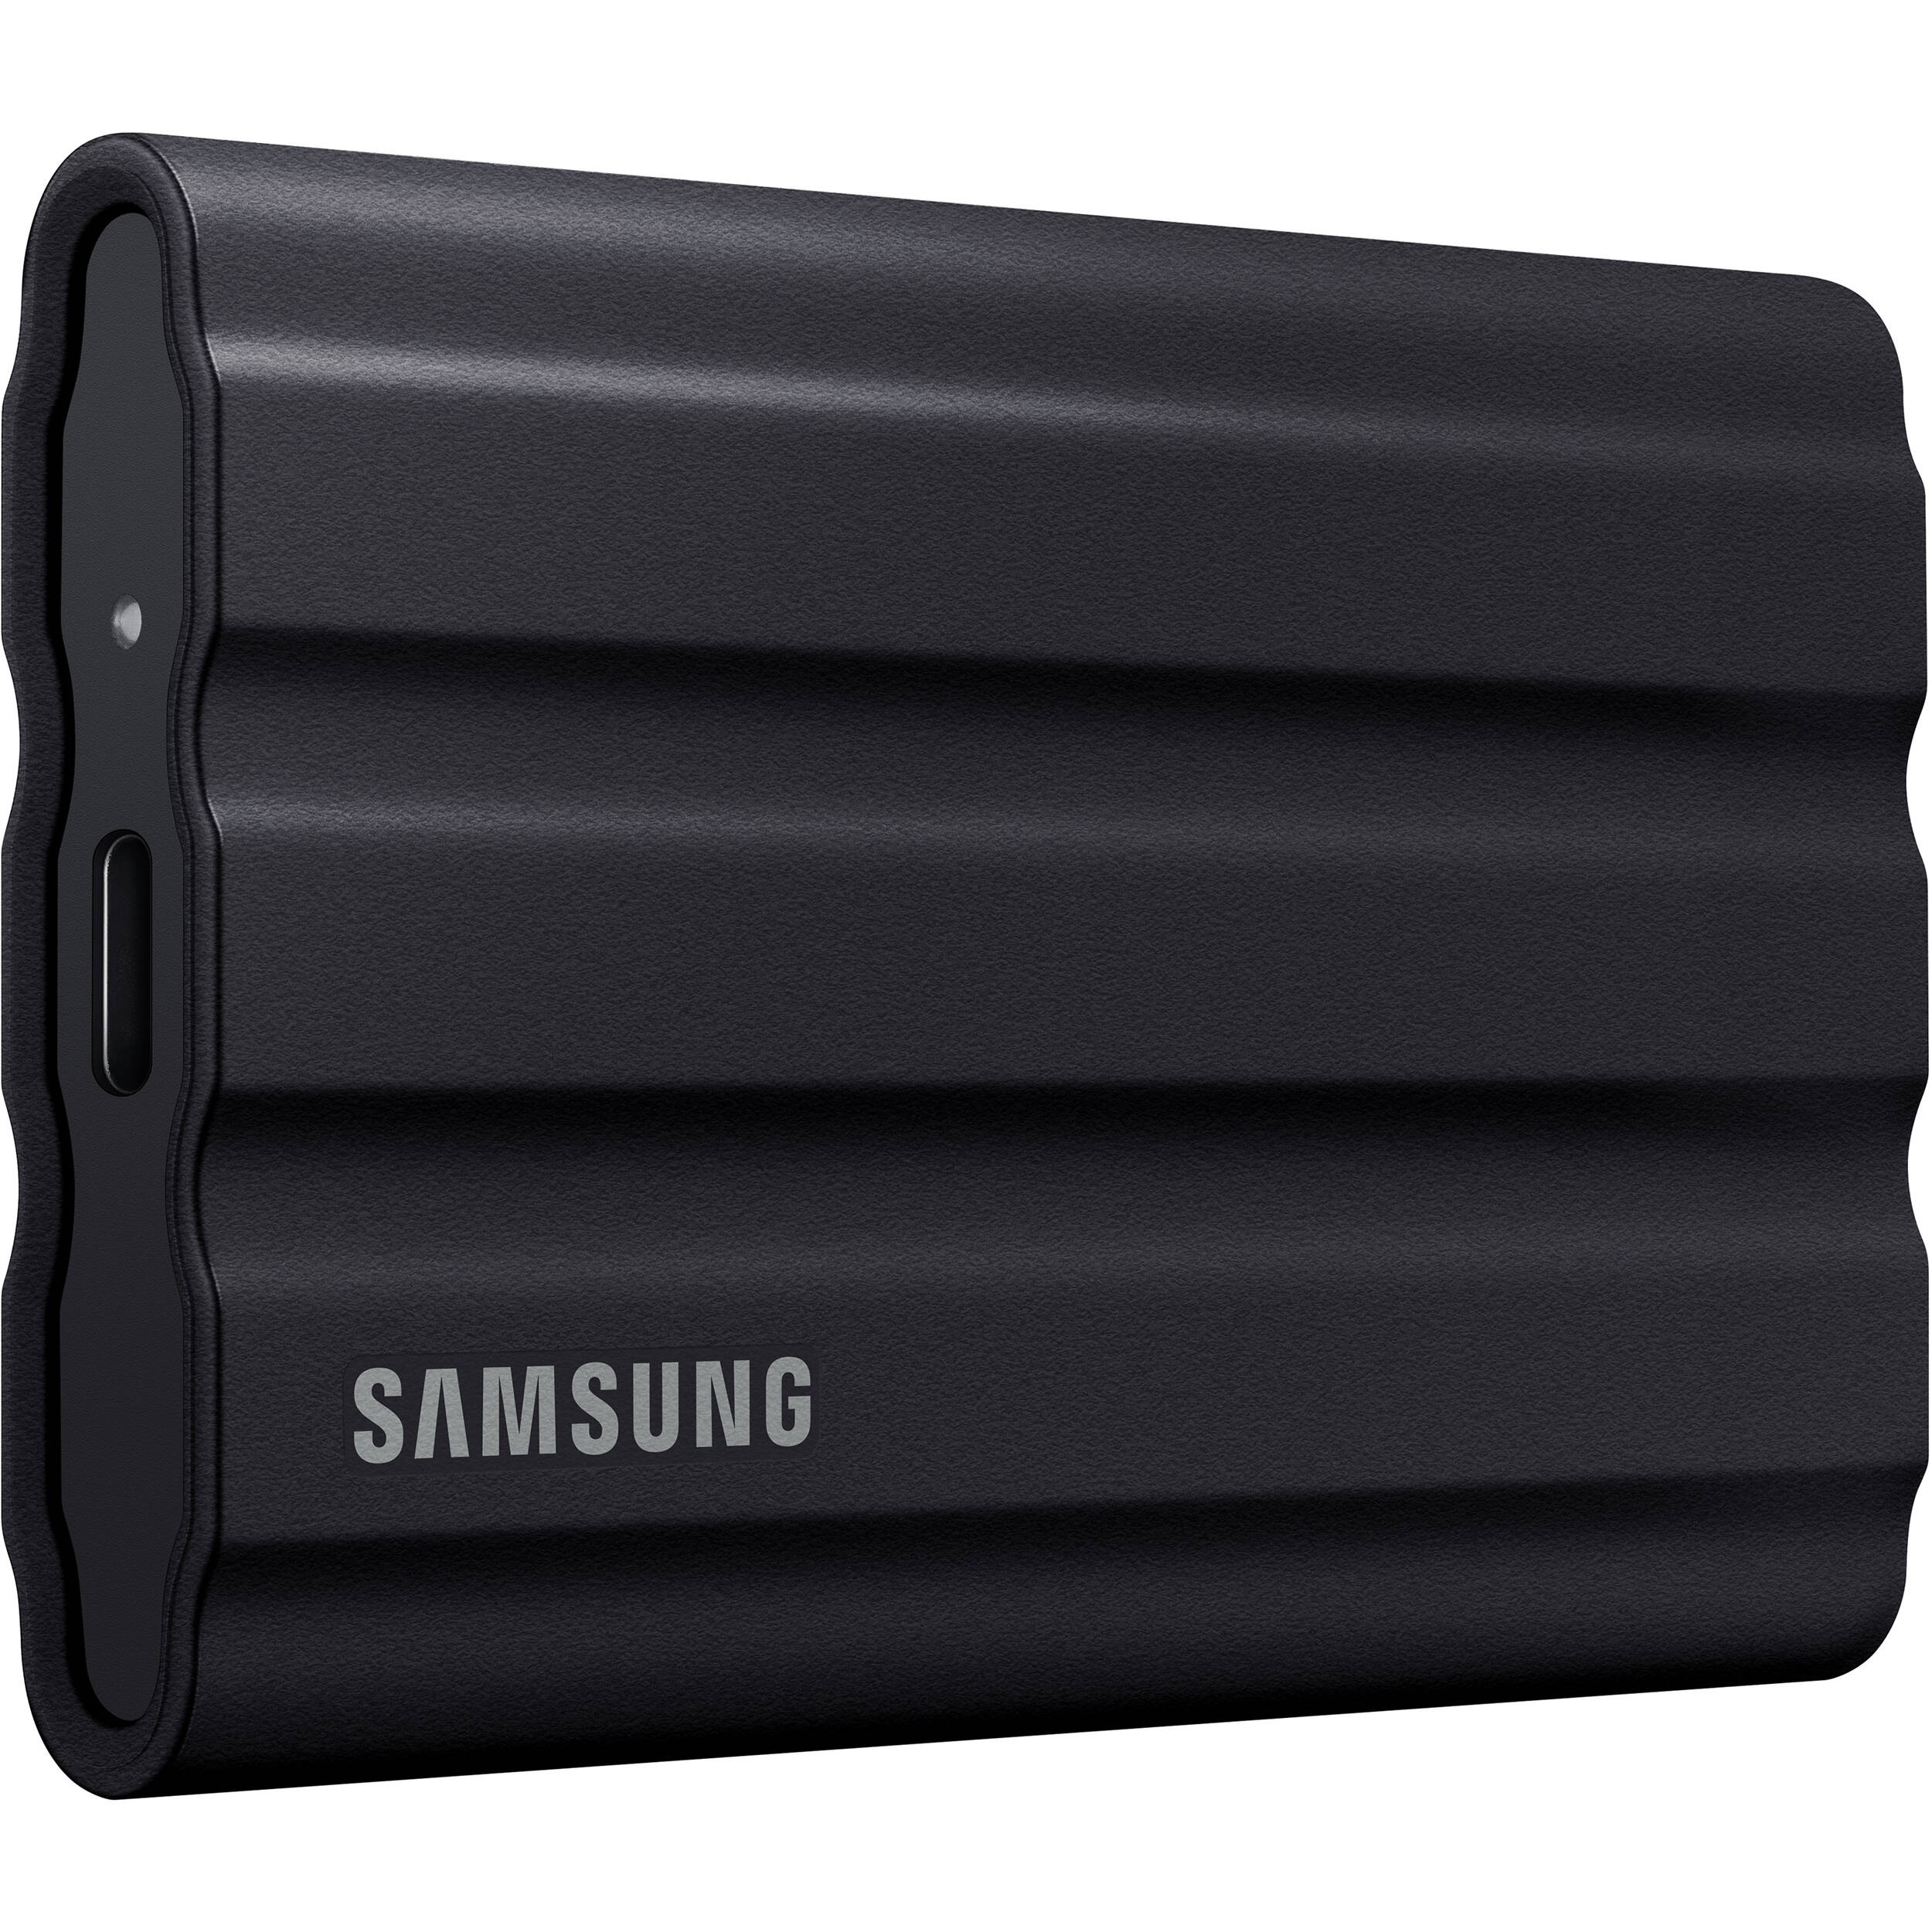 Samsung SSD T7 Shield 4TB Review - Camera Jabber